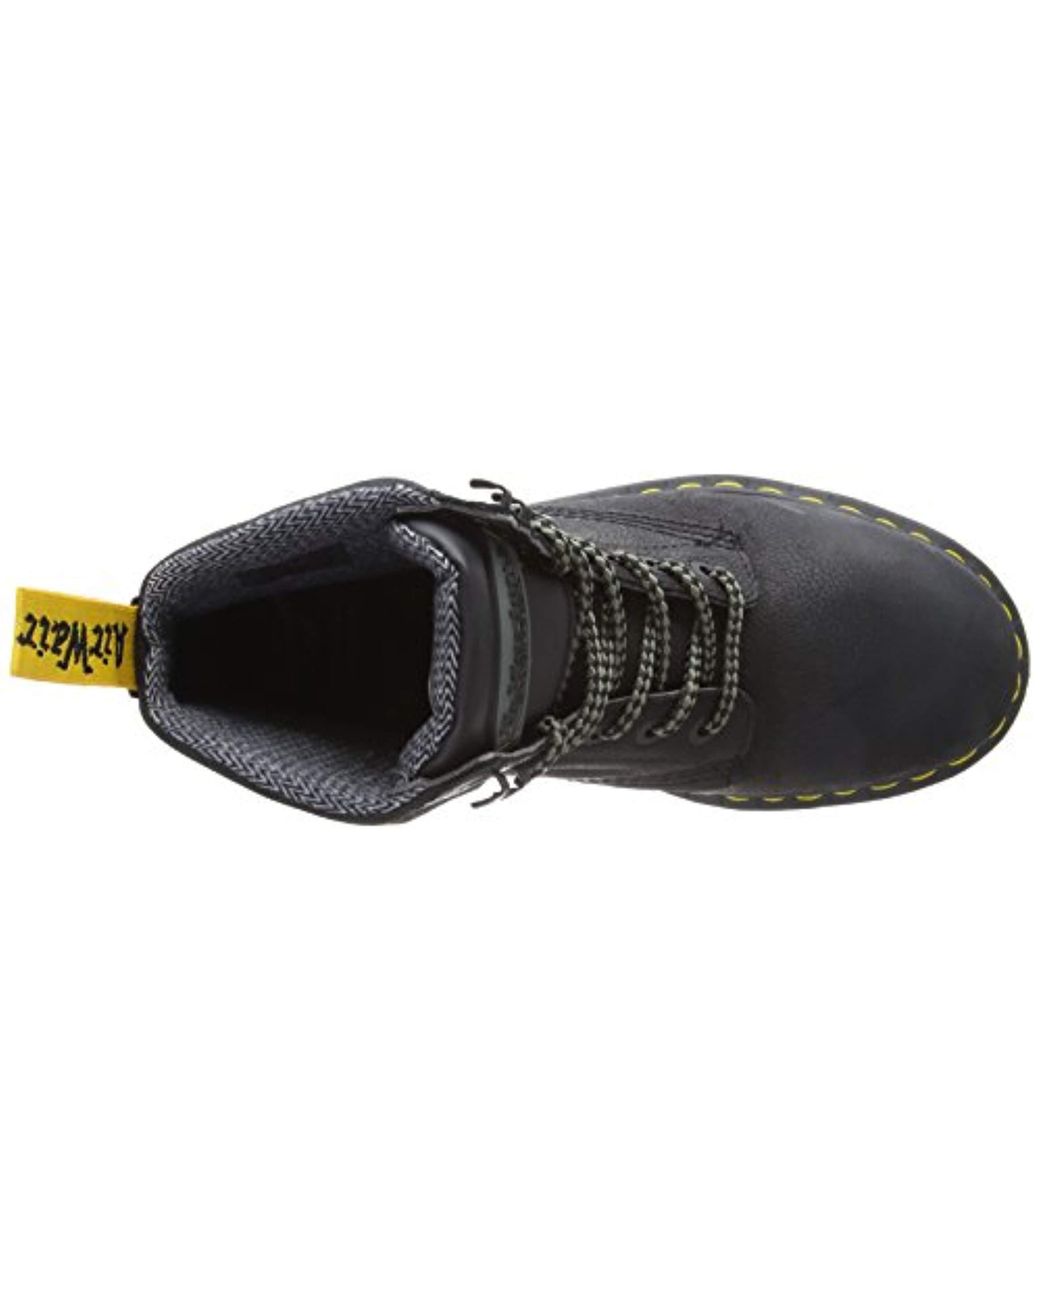 Dr. Martens Unisex Adults' Hyten S1p Safety Shoes in Black for Men | Lyst UK